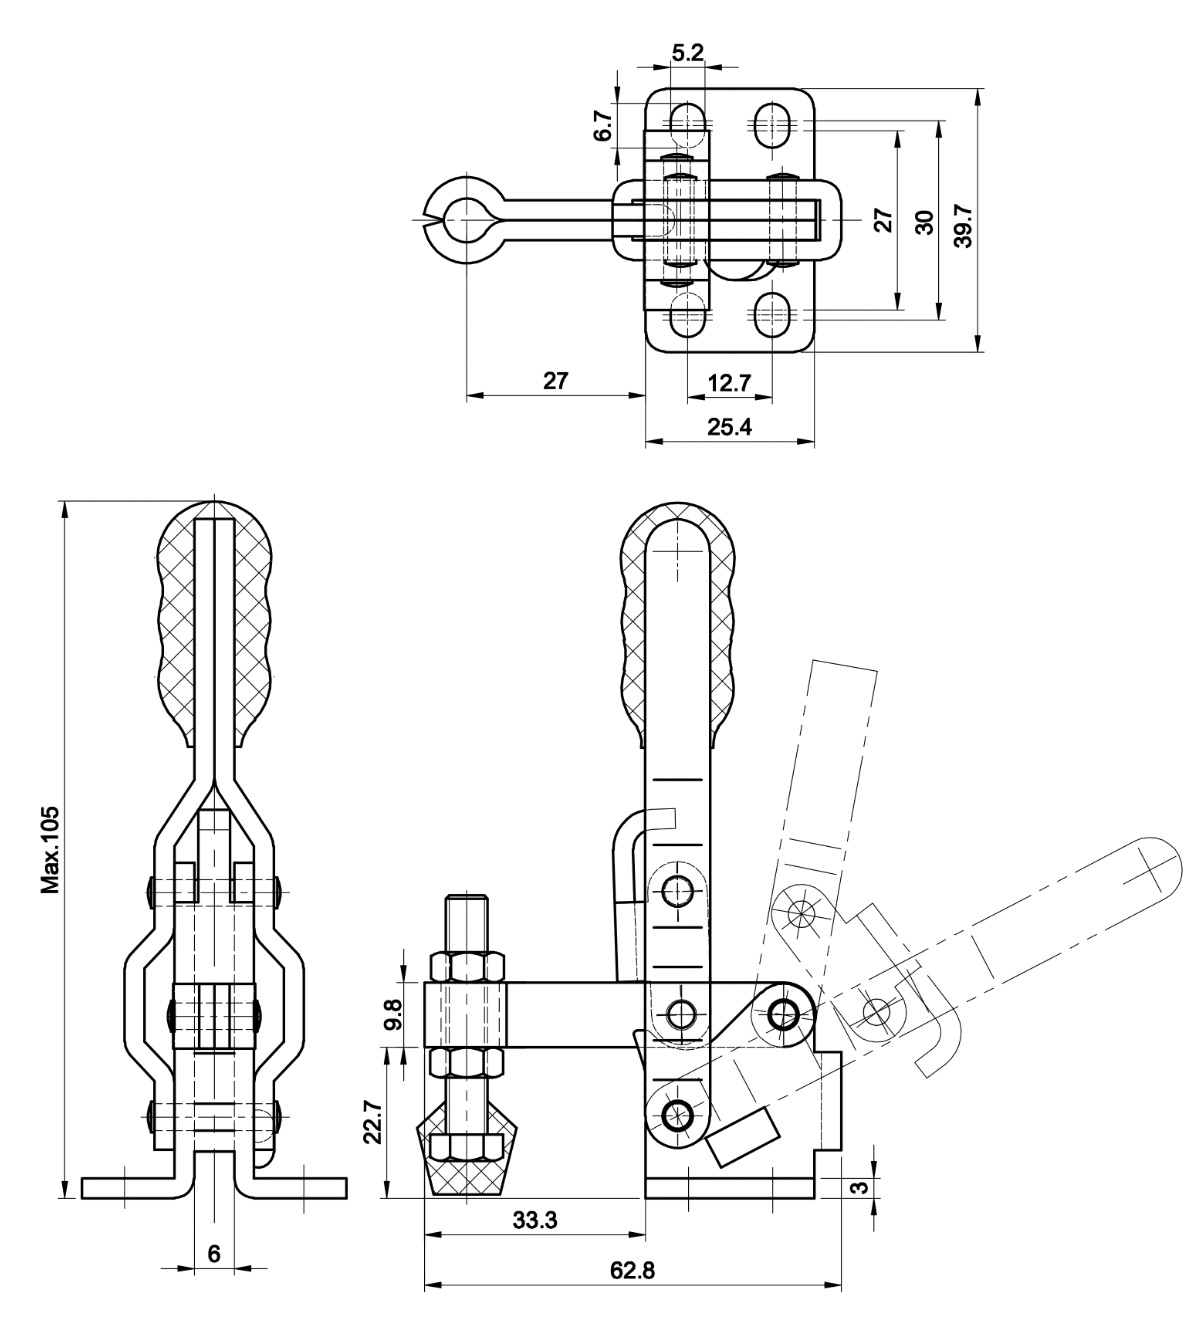 DSDST-12050-SS Technische Zeichnung Senkrechtspanner Vertikalspanner waagrechter Fuss 910N - EDELSTAHL